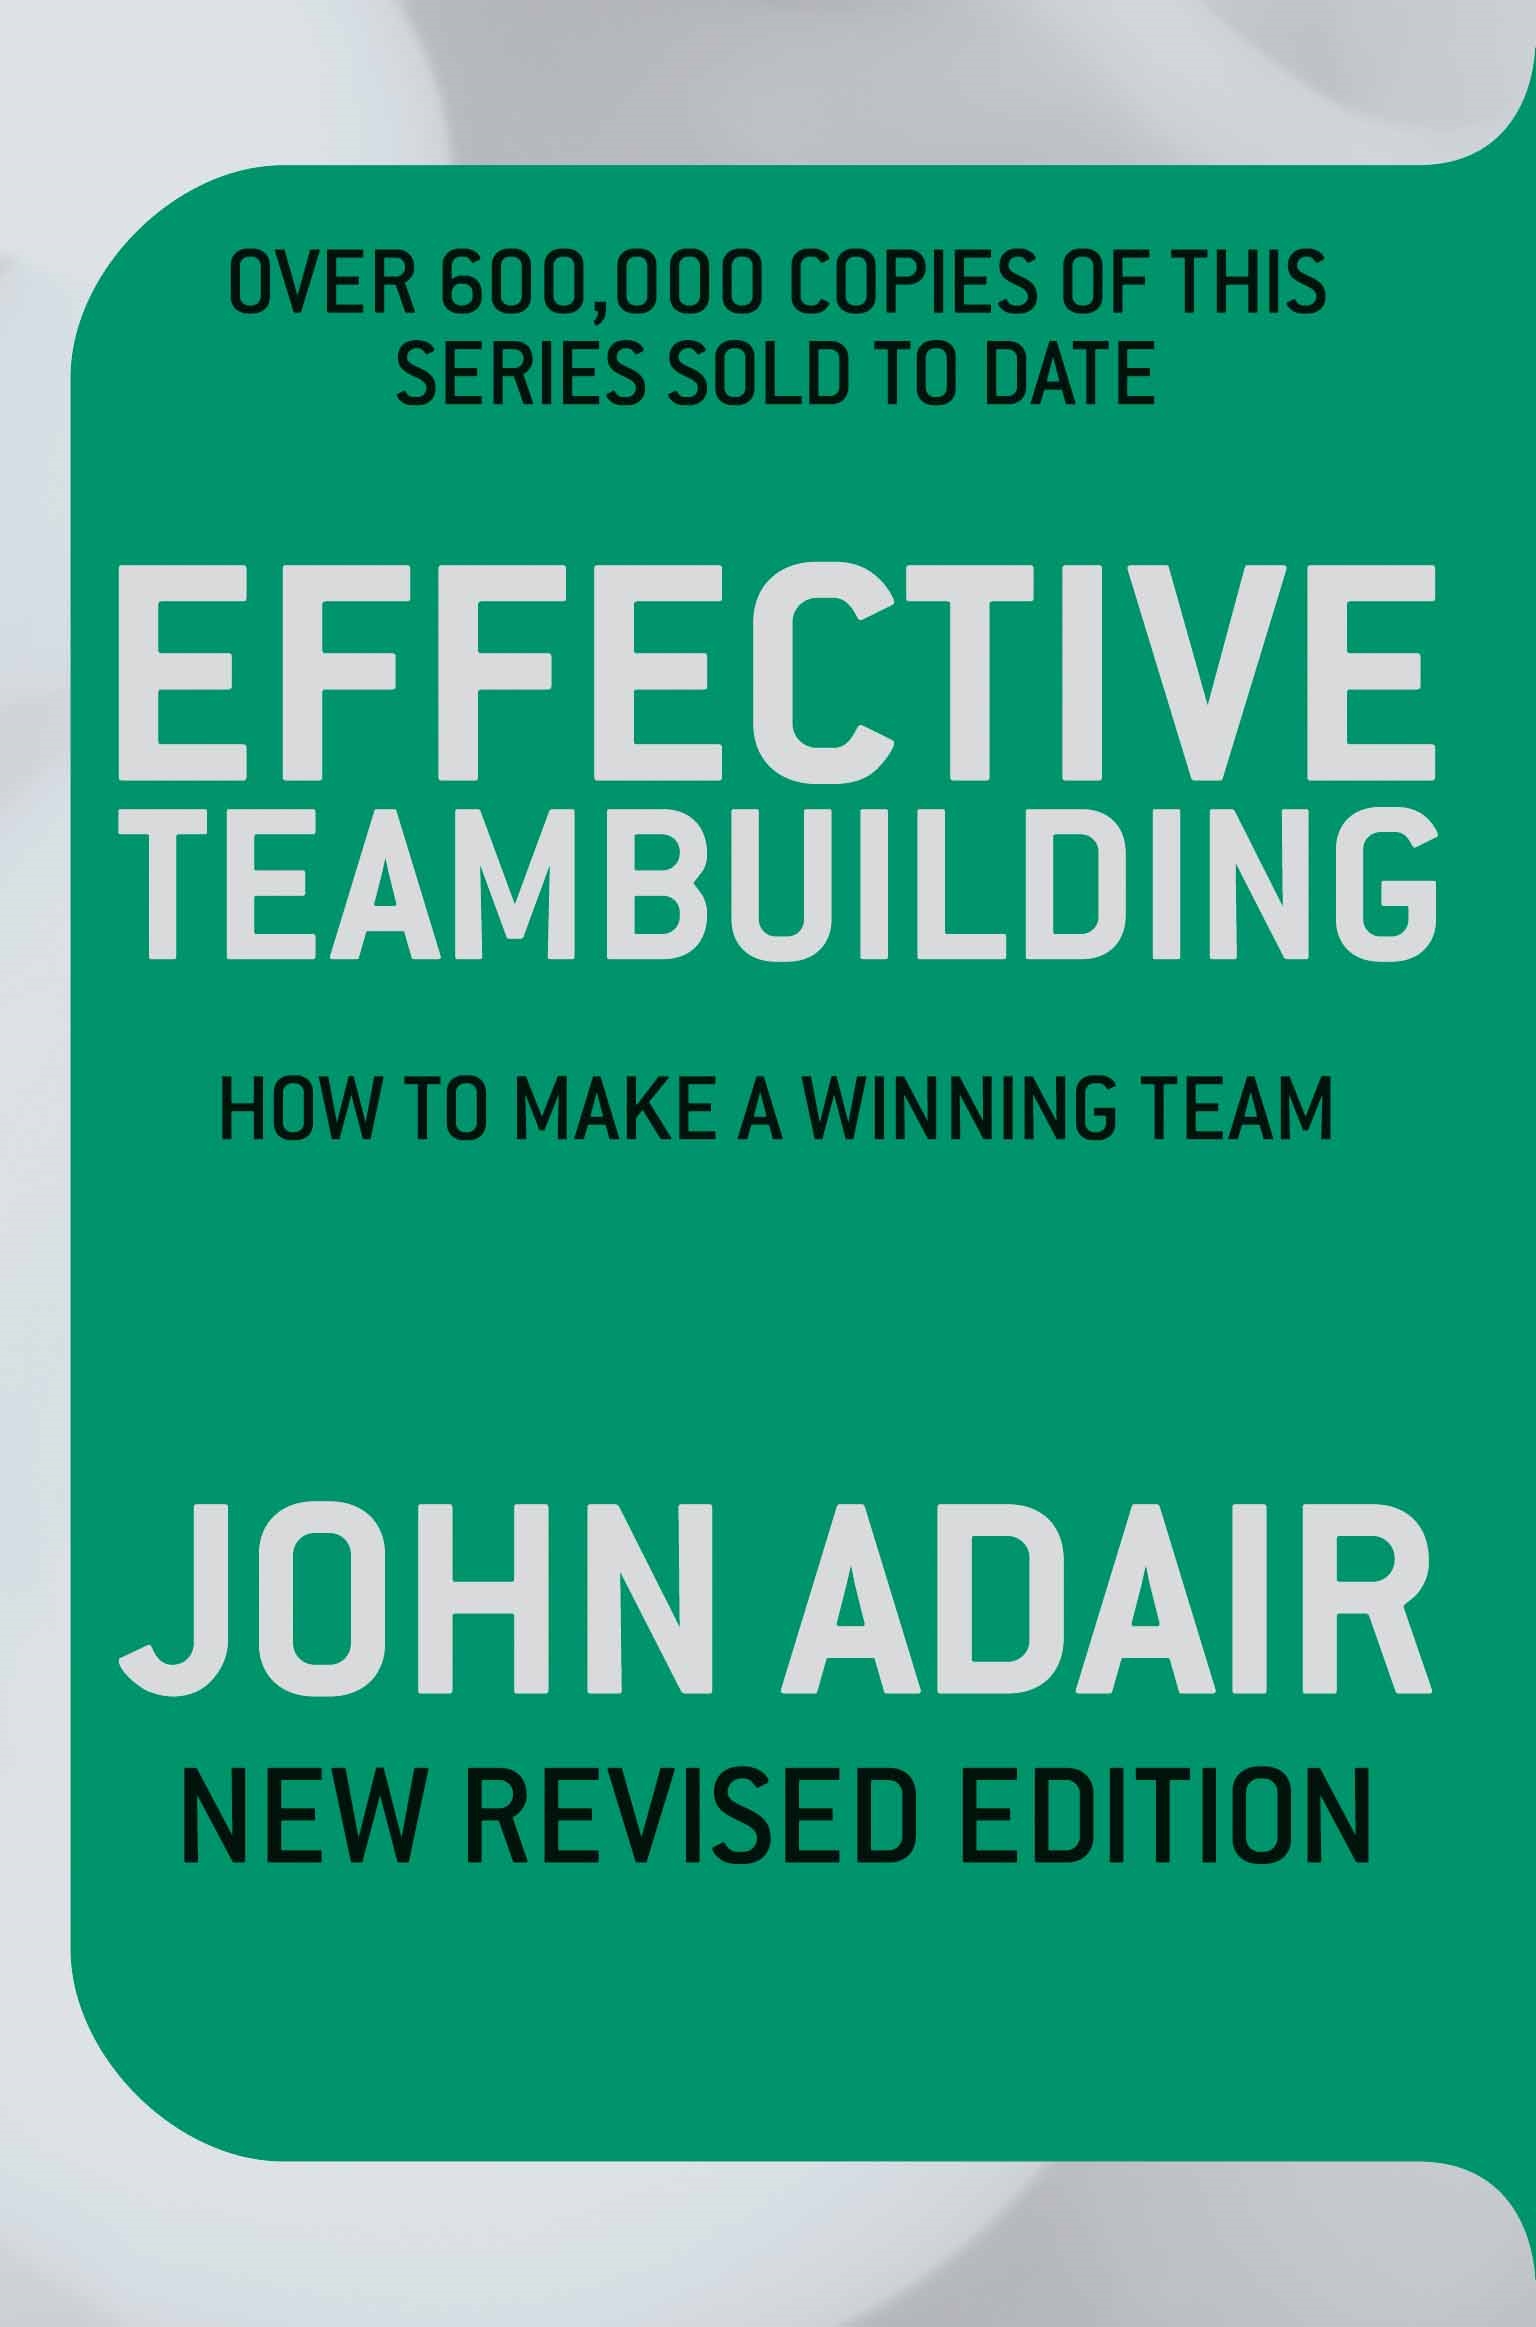 Effective Teambuilding REVISED ED